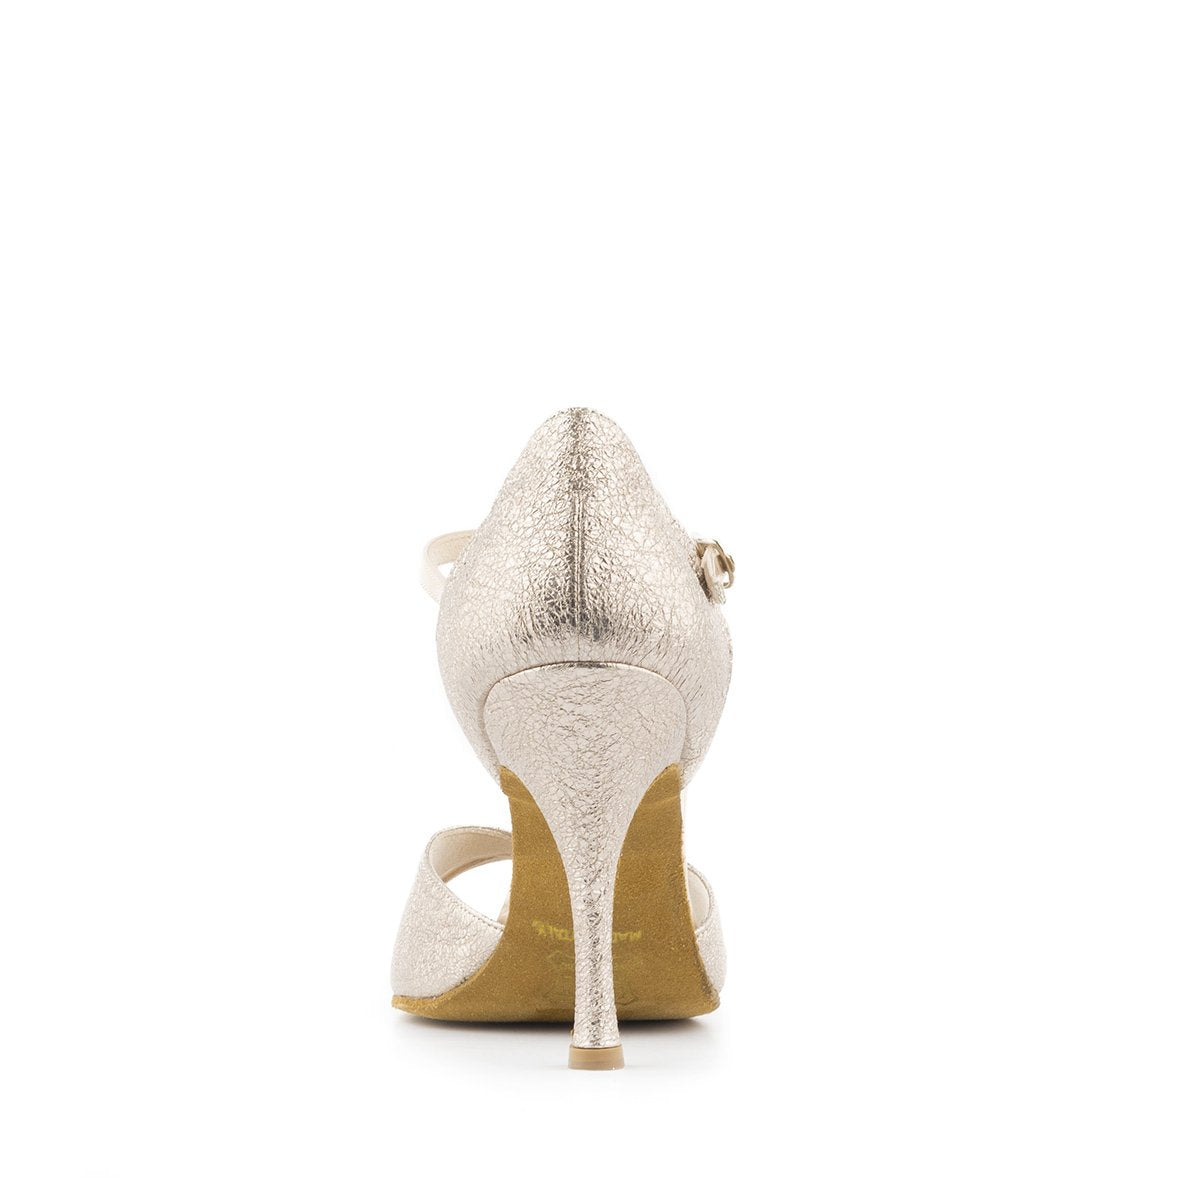 Stiletto heel of women's Argentine tango dance shoe